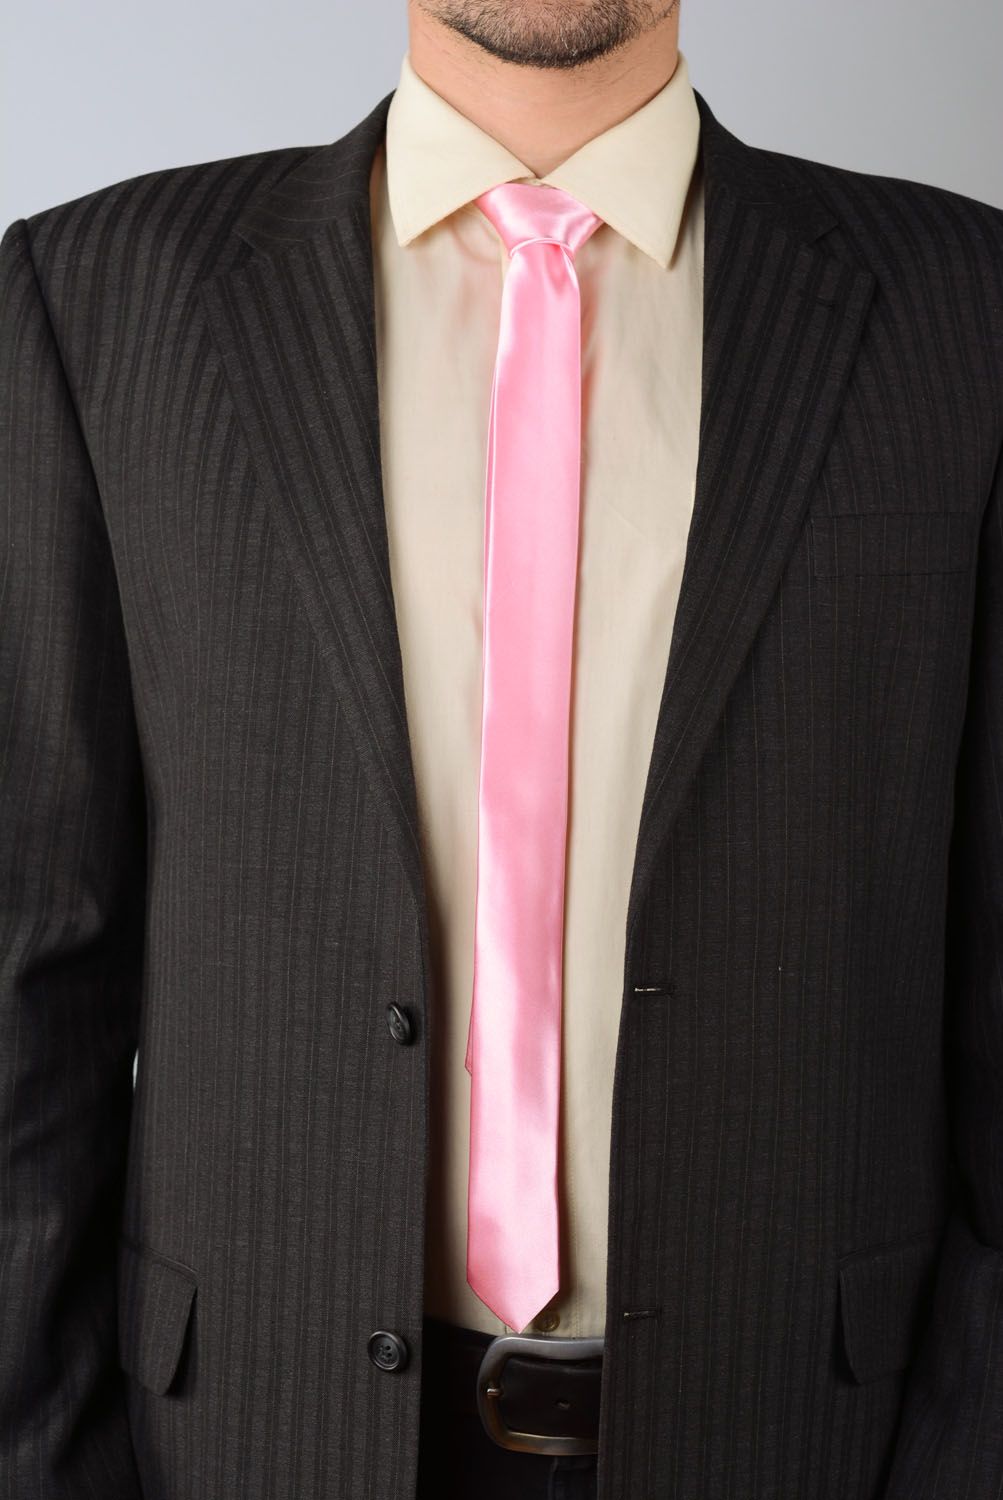 Cravate du satin rose faite main photo 1